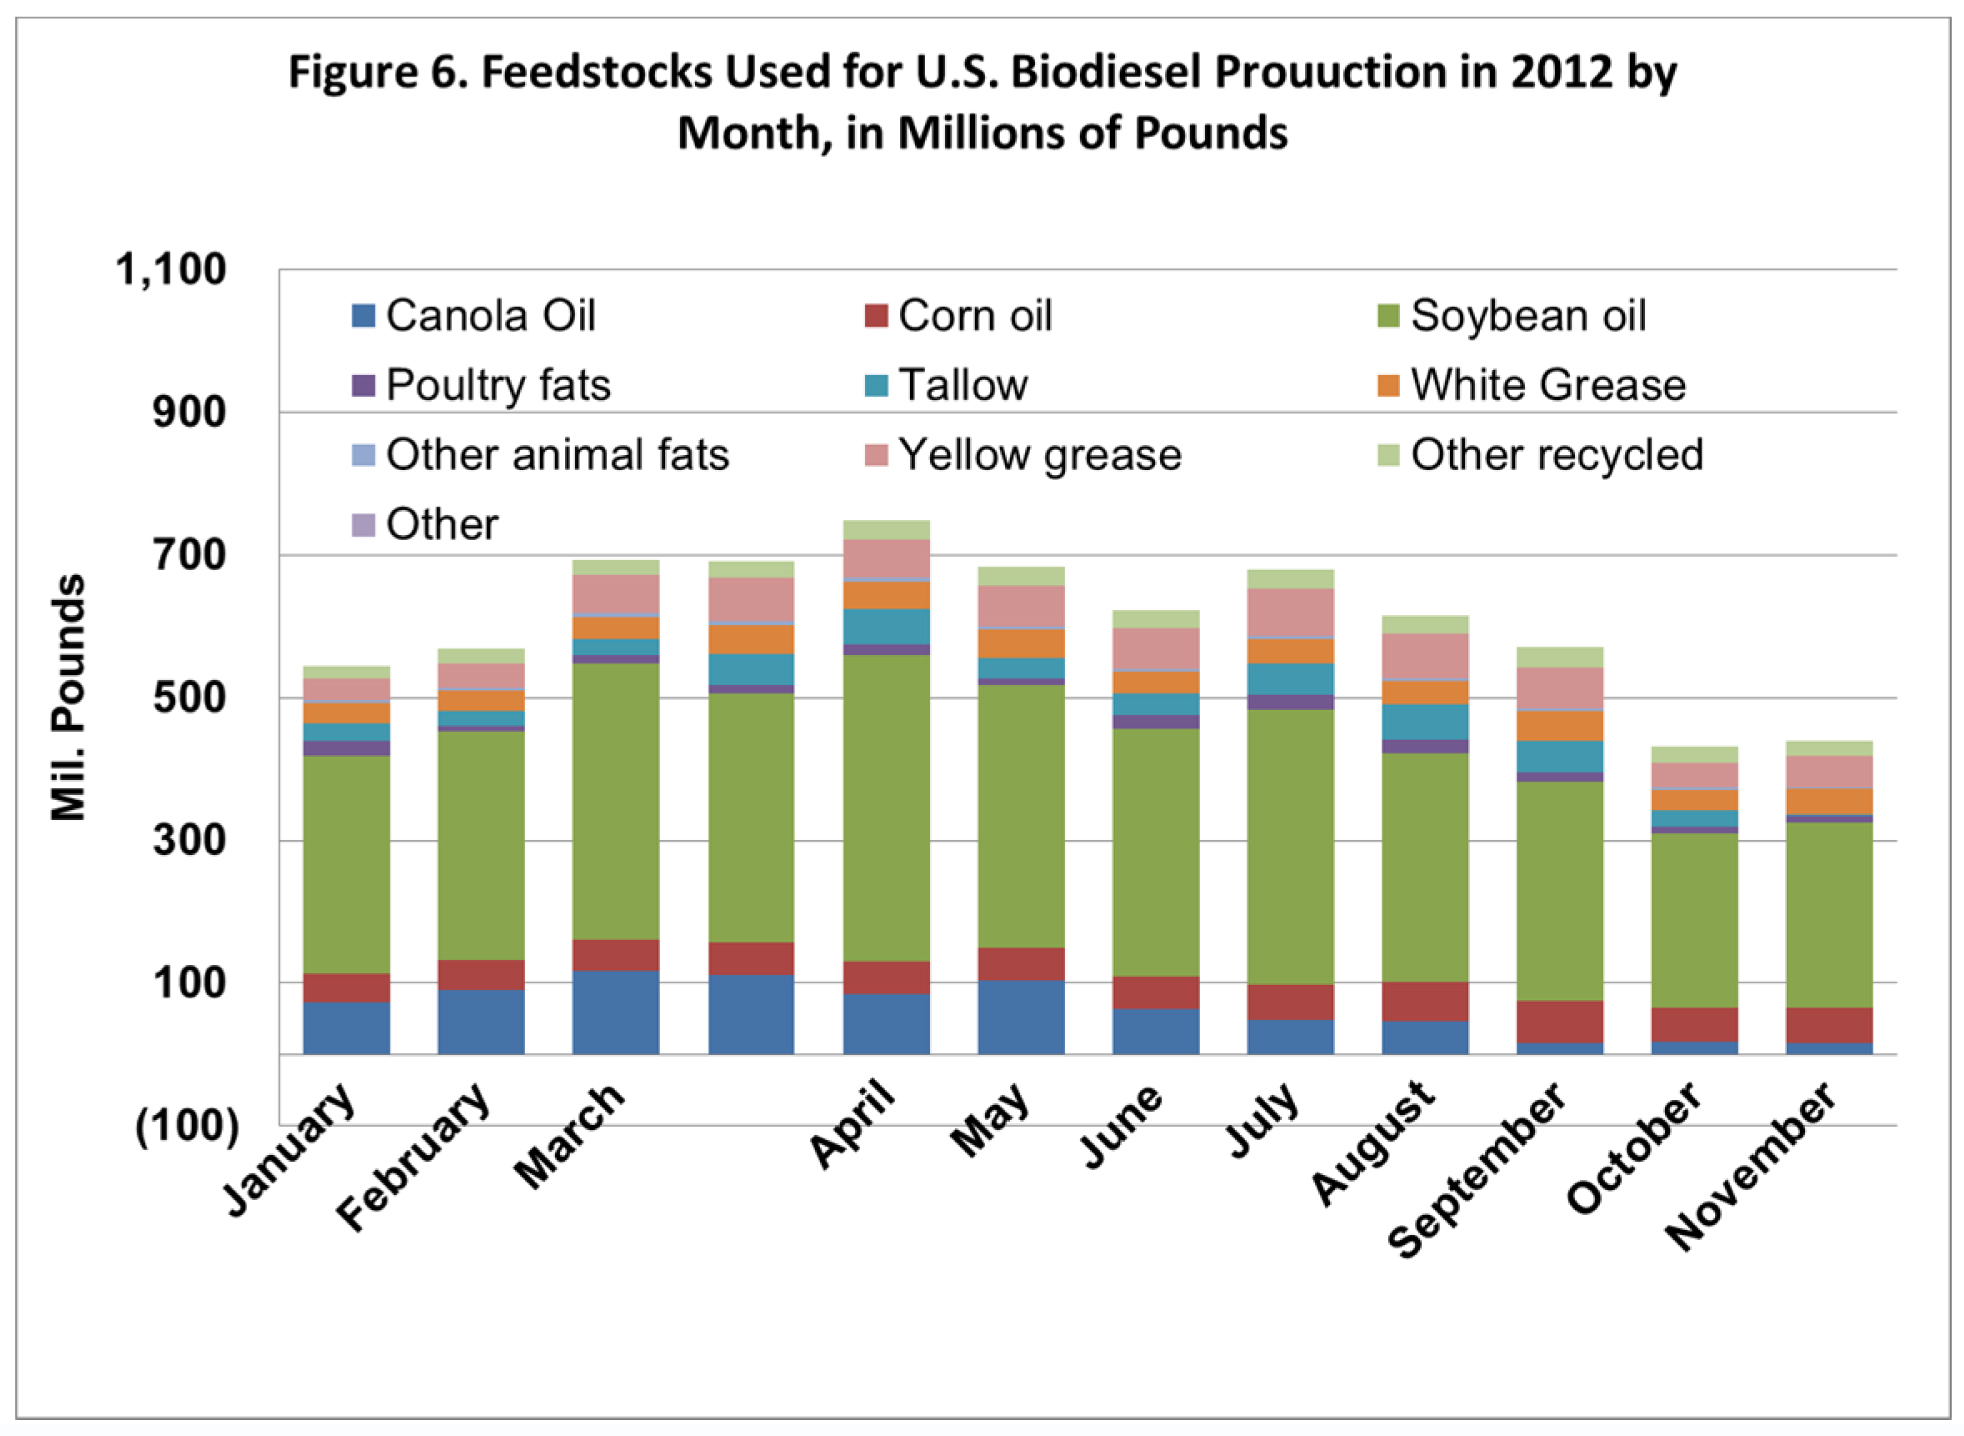 Feedstocks used for U.S. biodiesel production in 2012